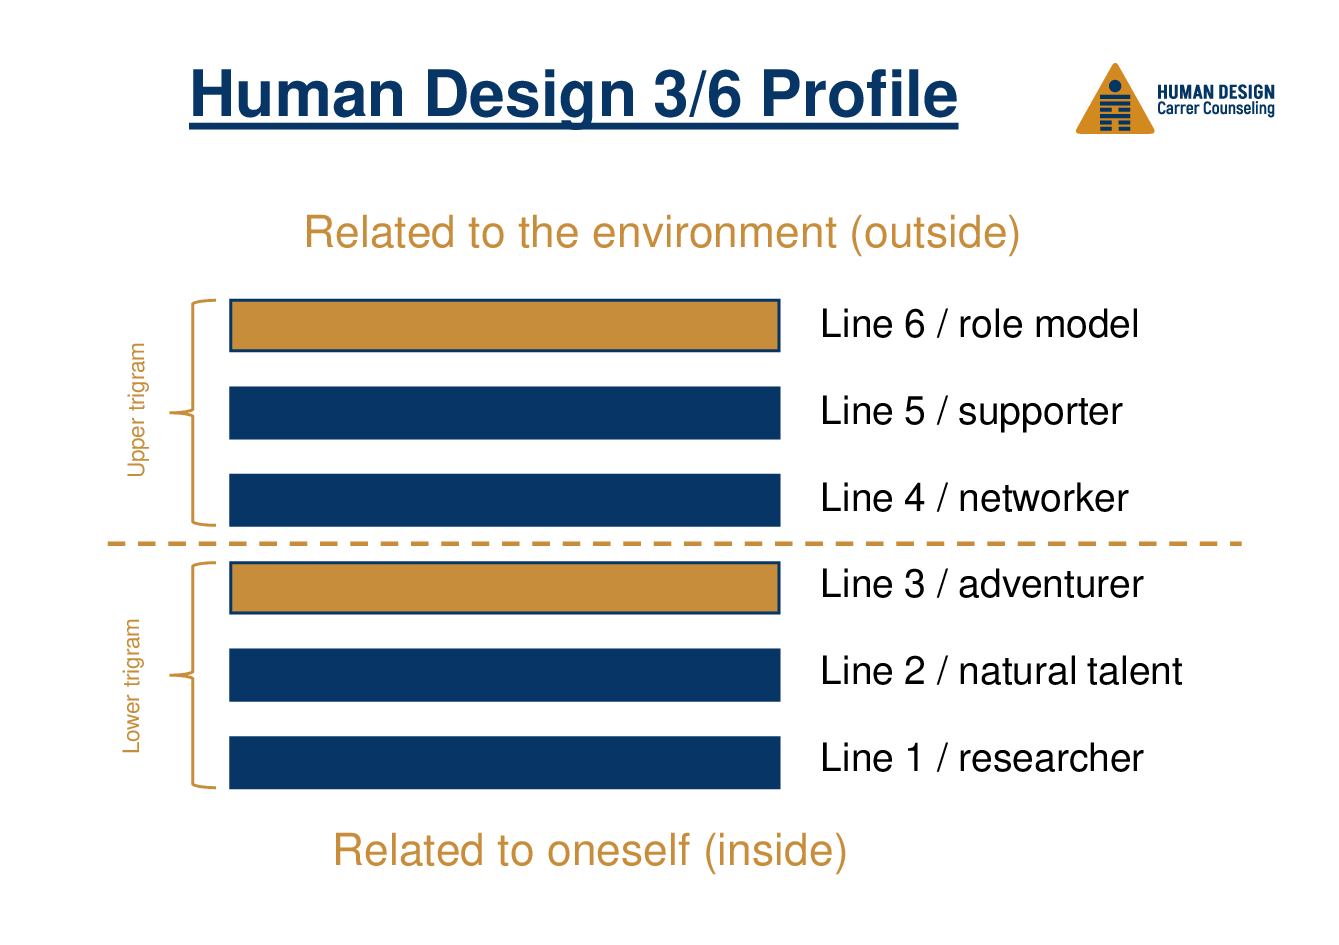 Human Design 3/6 Profile on the job